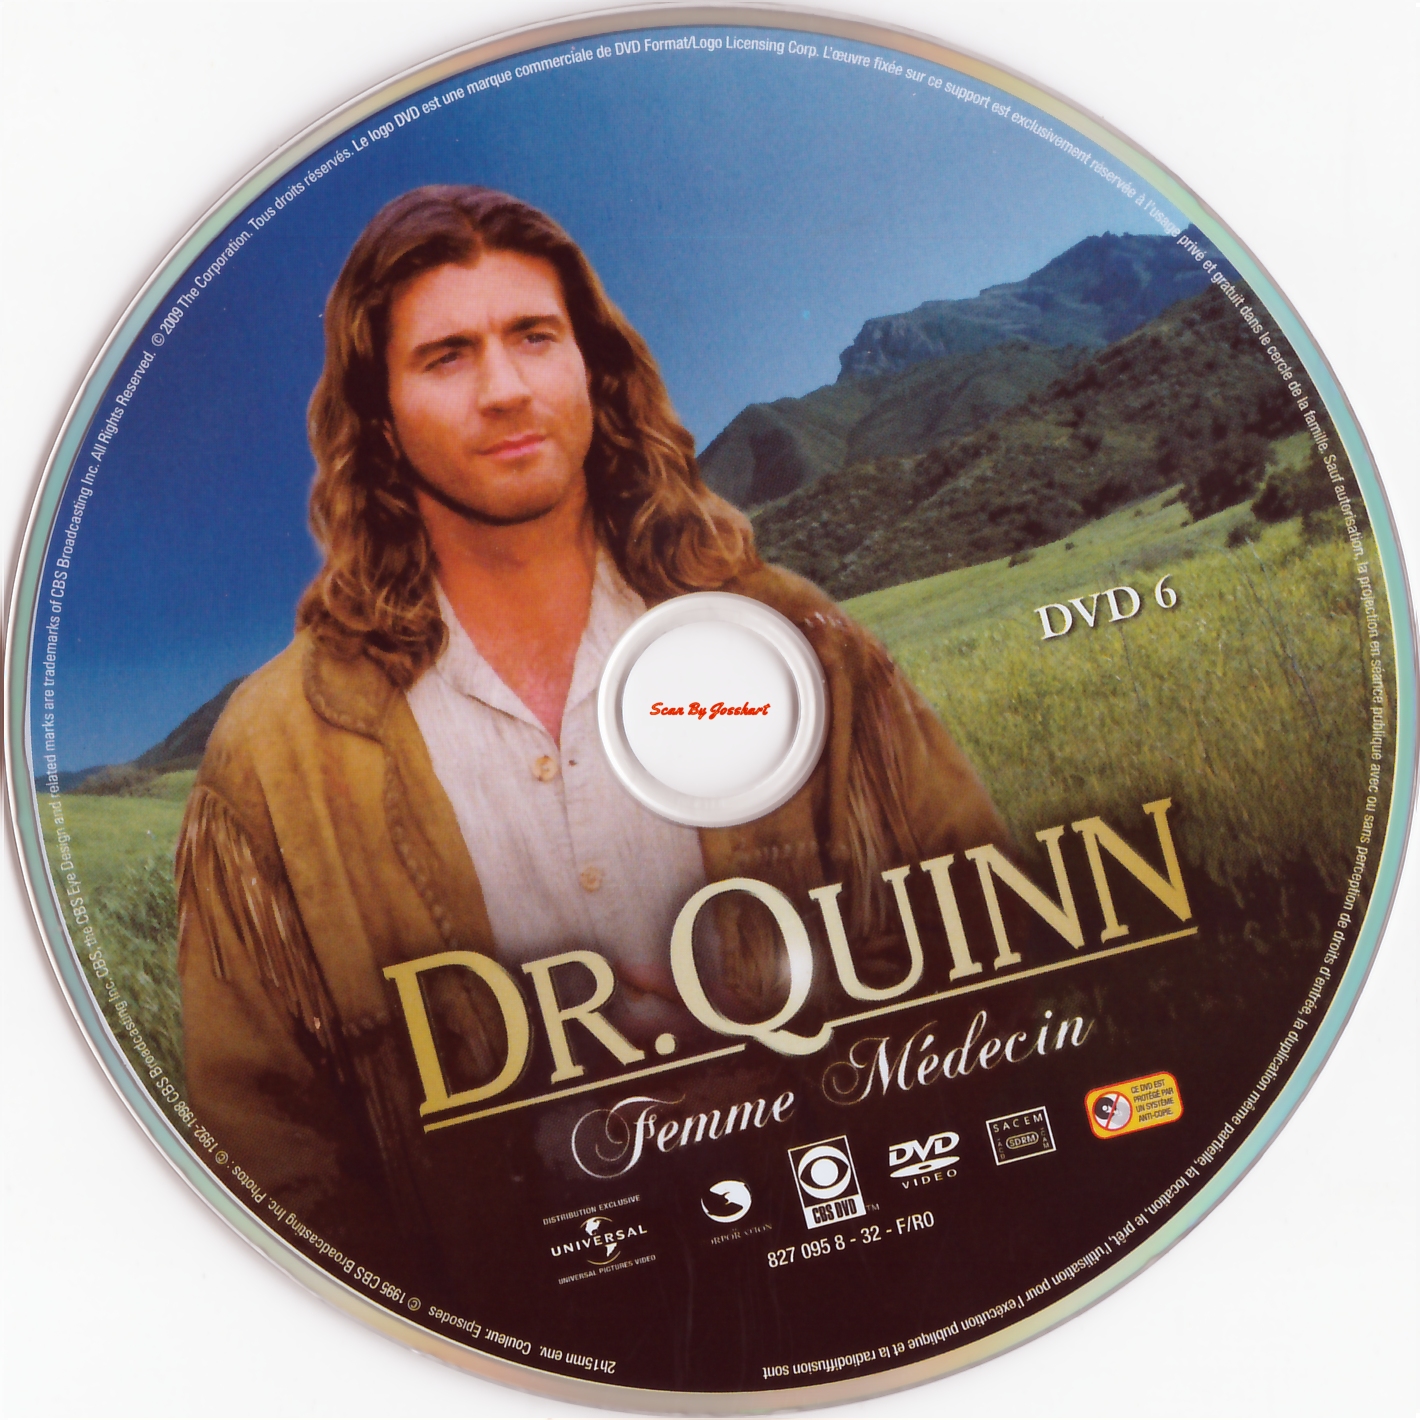 Docteur Quinn femme mdecin - Integrale Saison 3 DISC 6